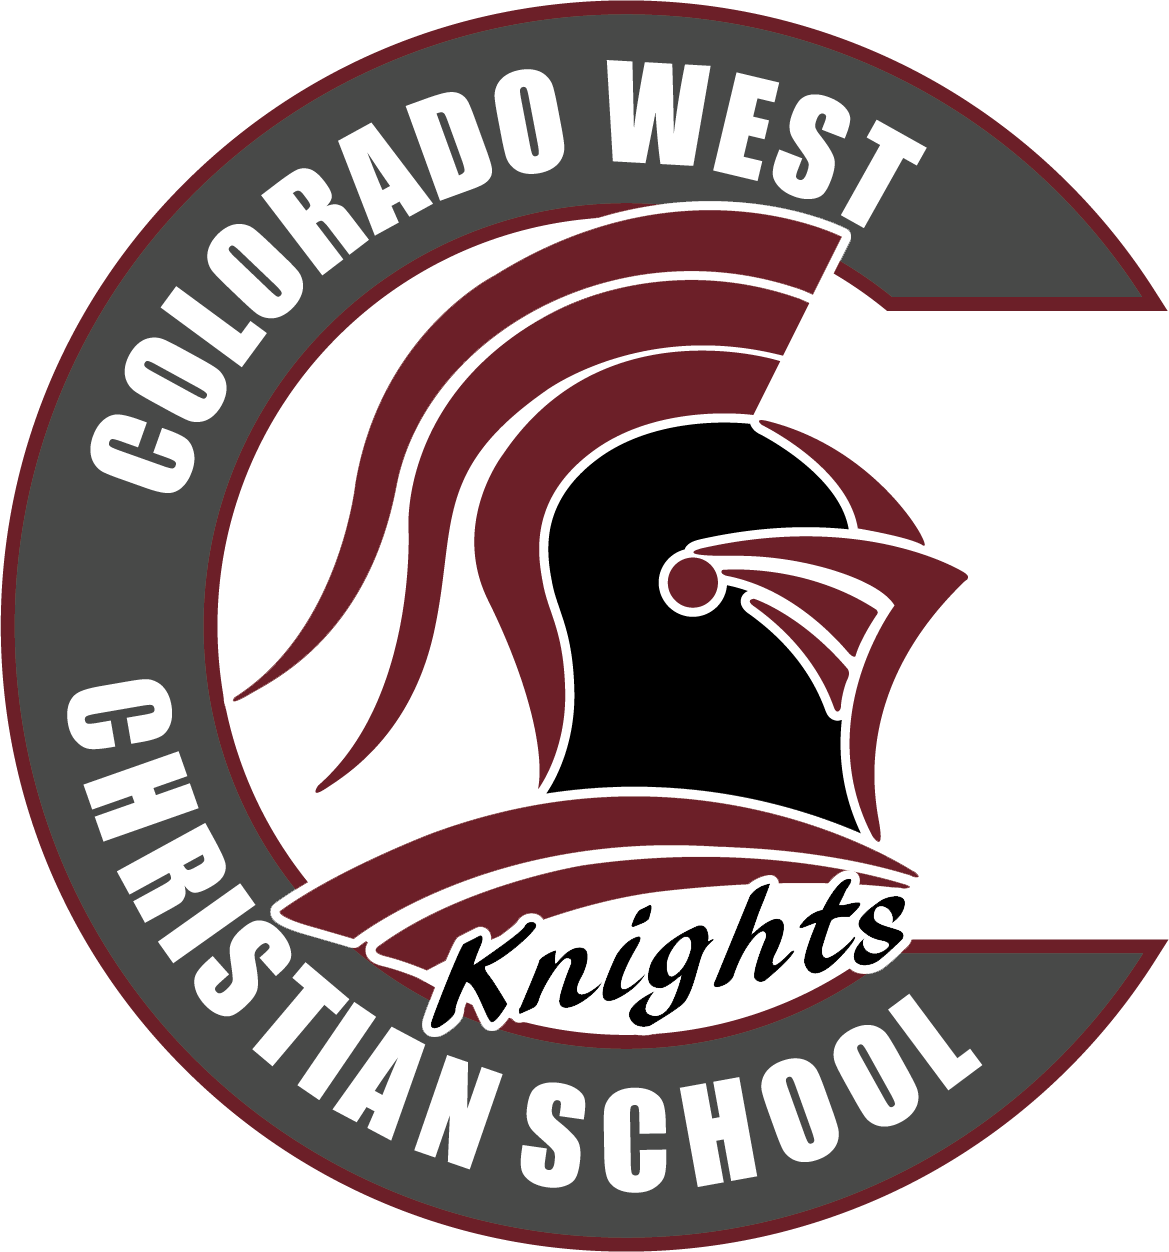 Colorado West Christian School